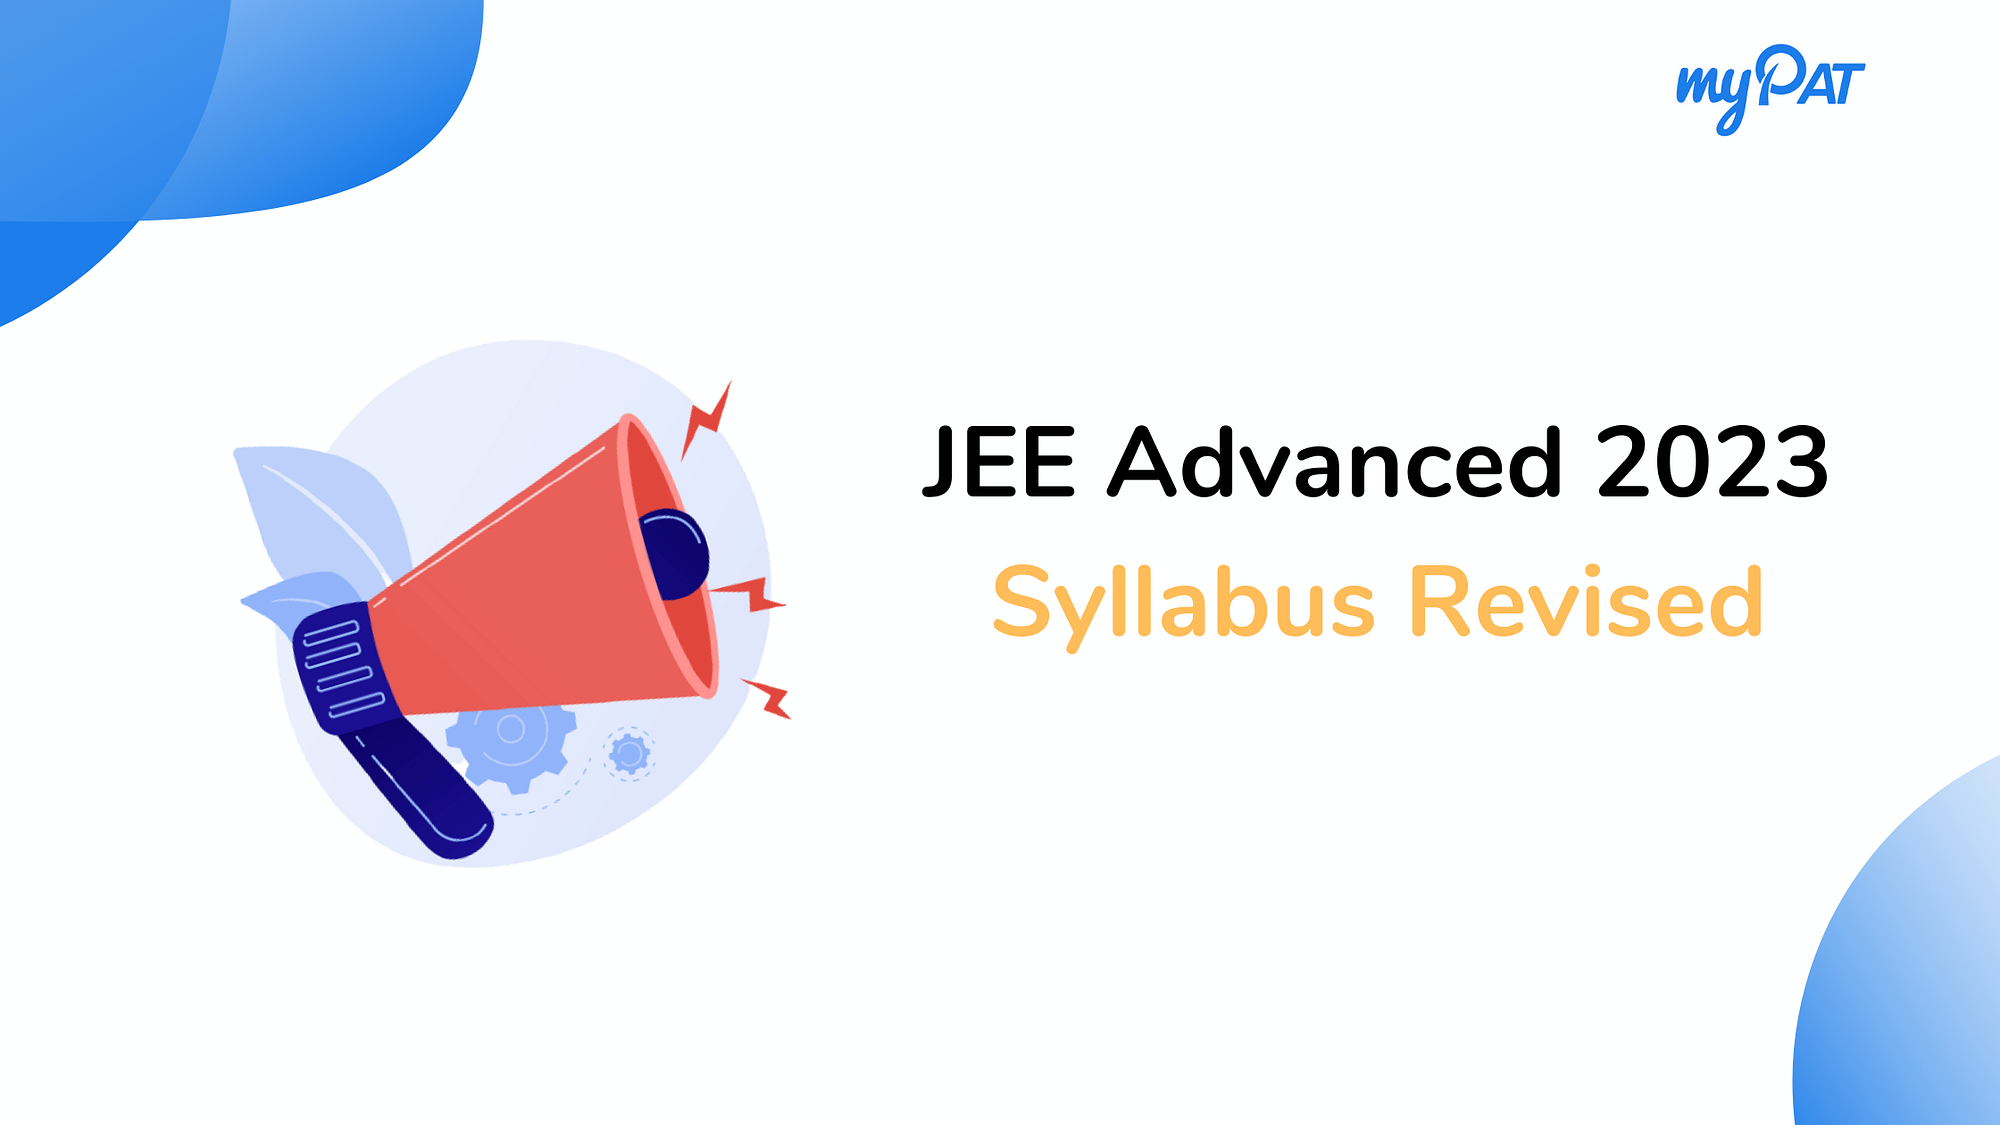 JEE Advanced 2023 syllabus revised